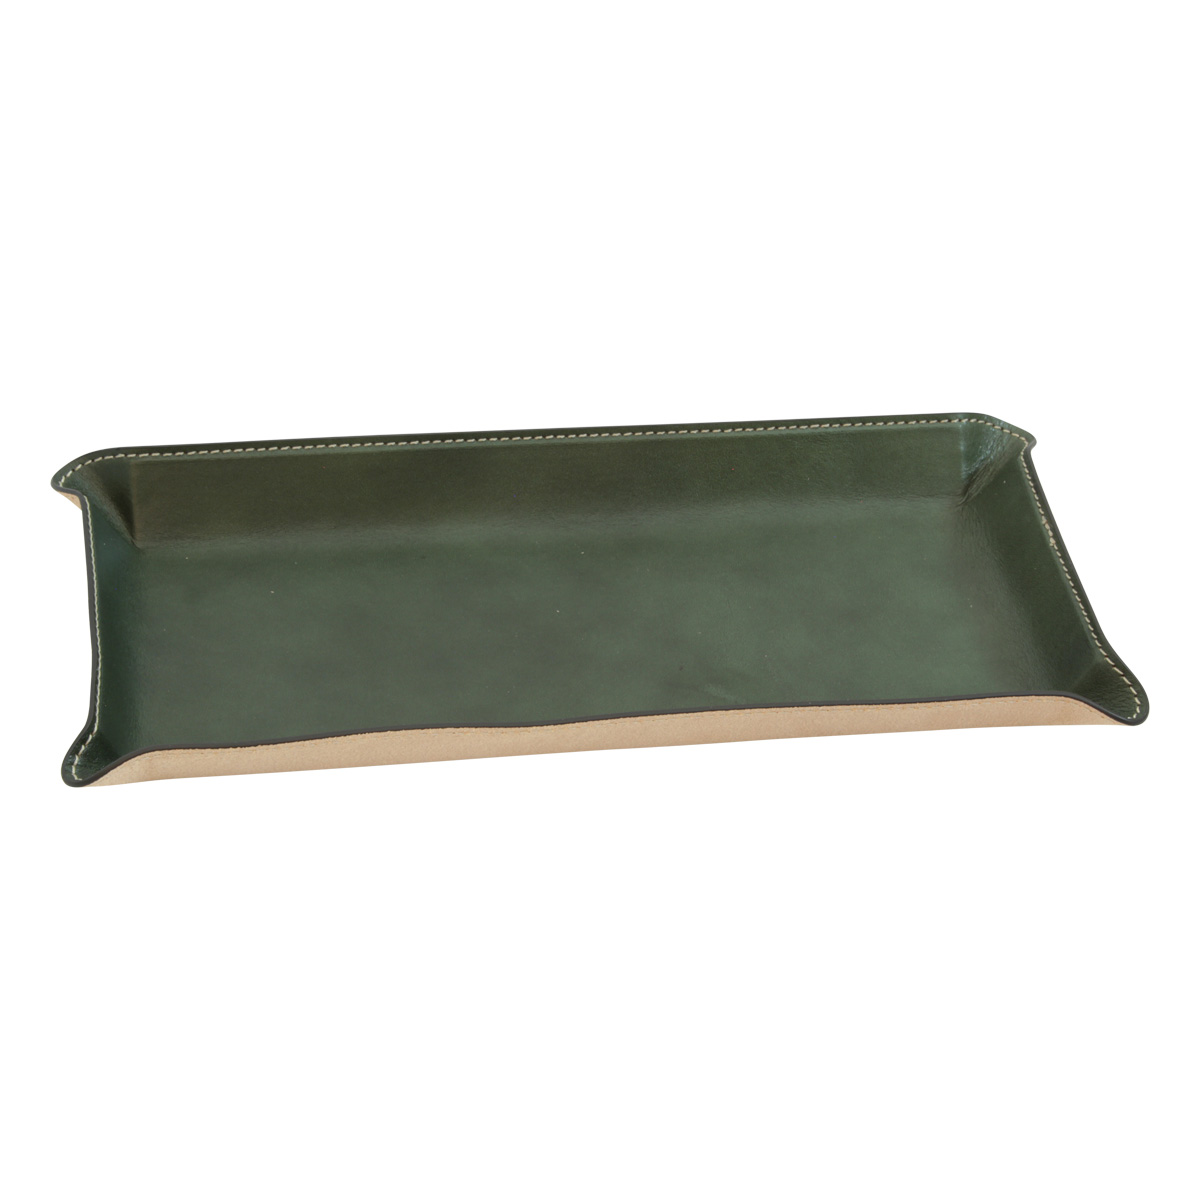 Leather desk tray - green|762089VE|Old Angler Firenze